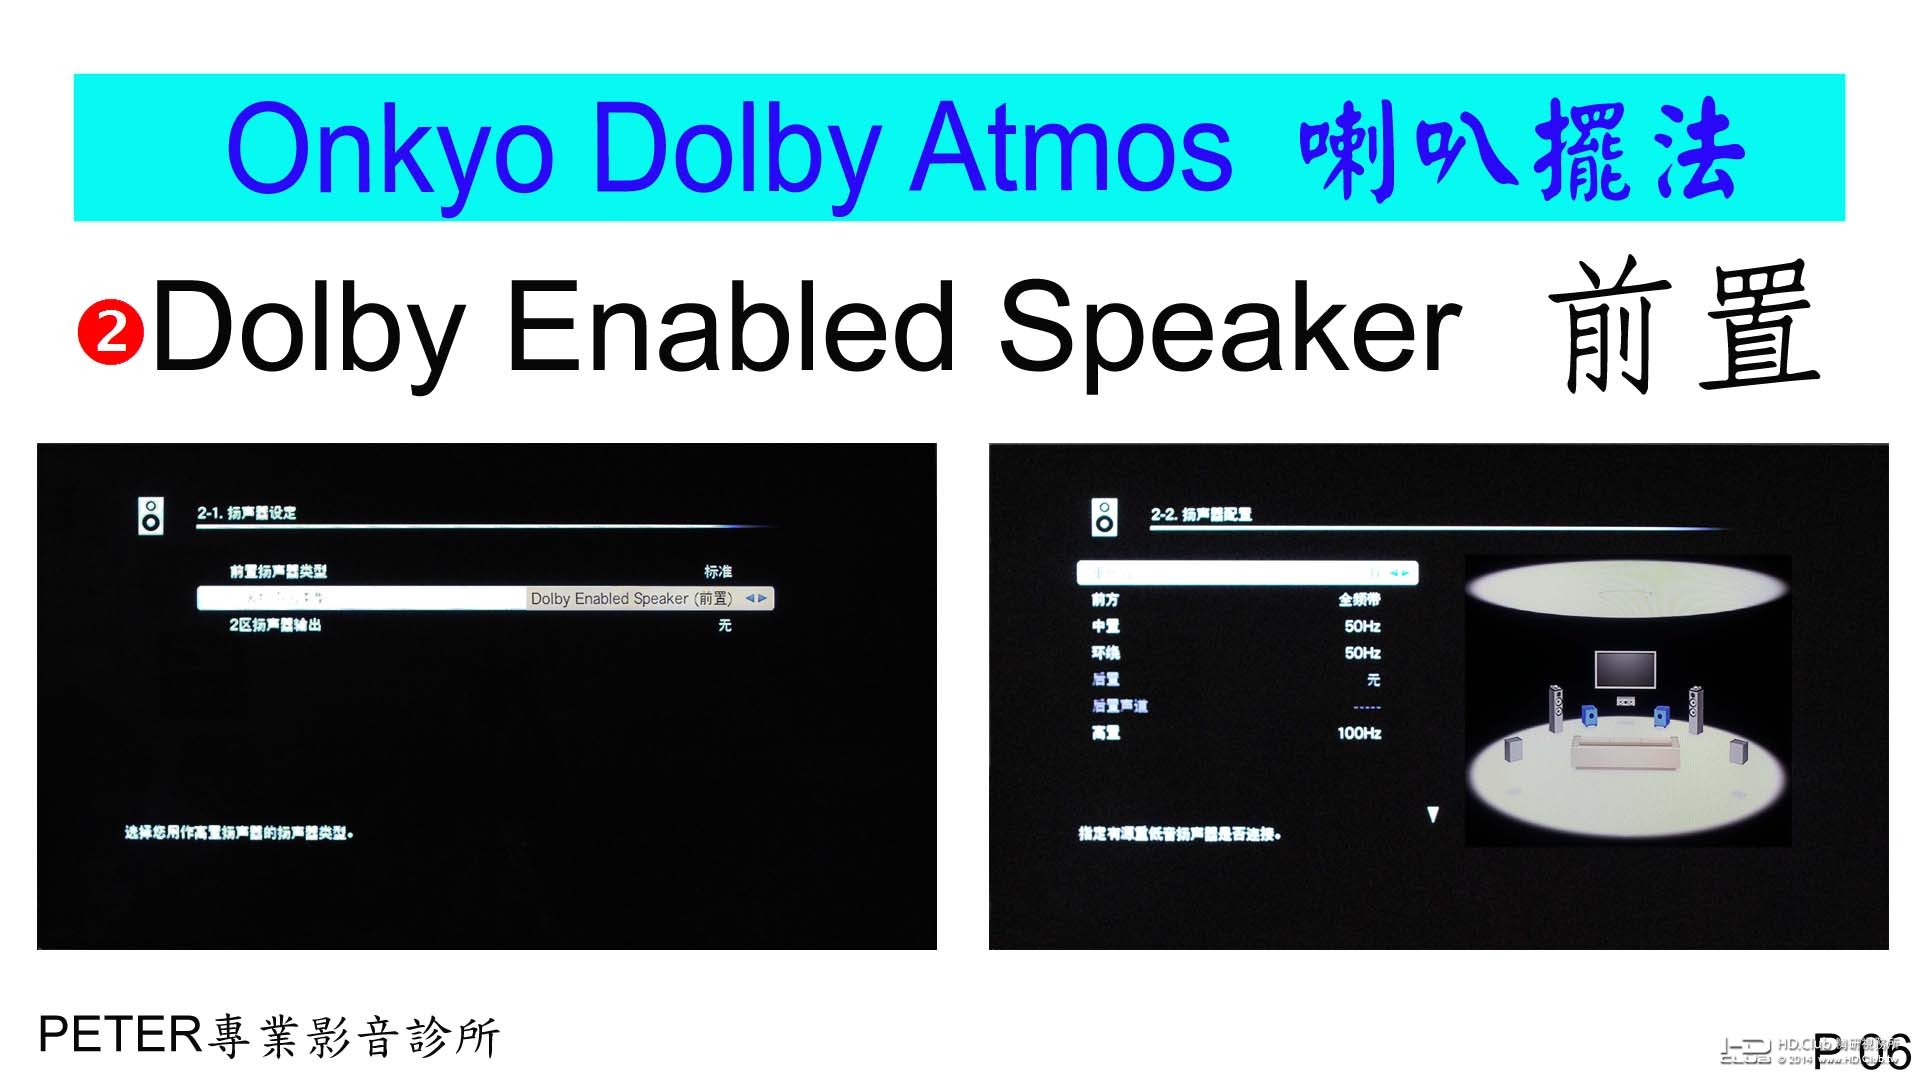 06 Onkyo Dolby Atmos 喇叭擺法.jpg